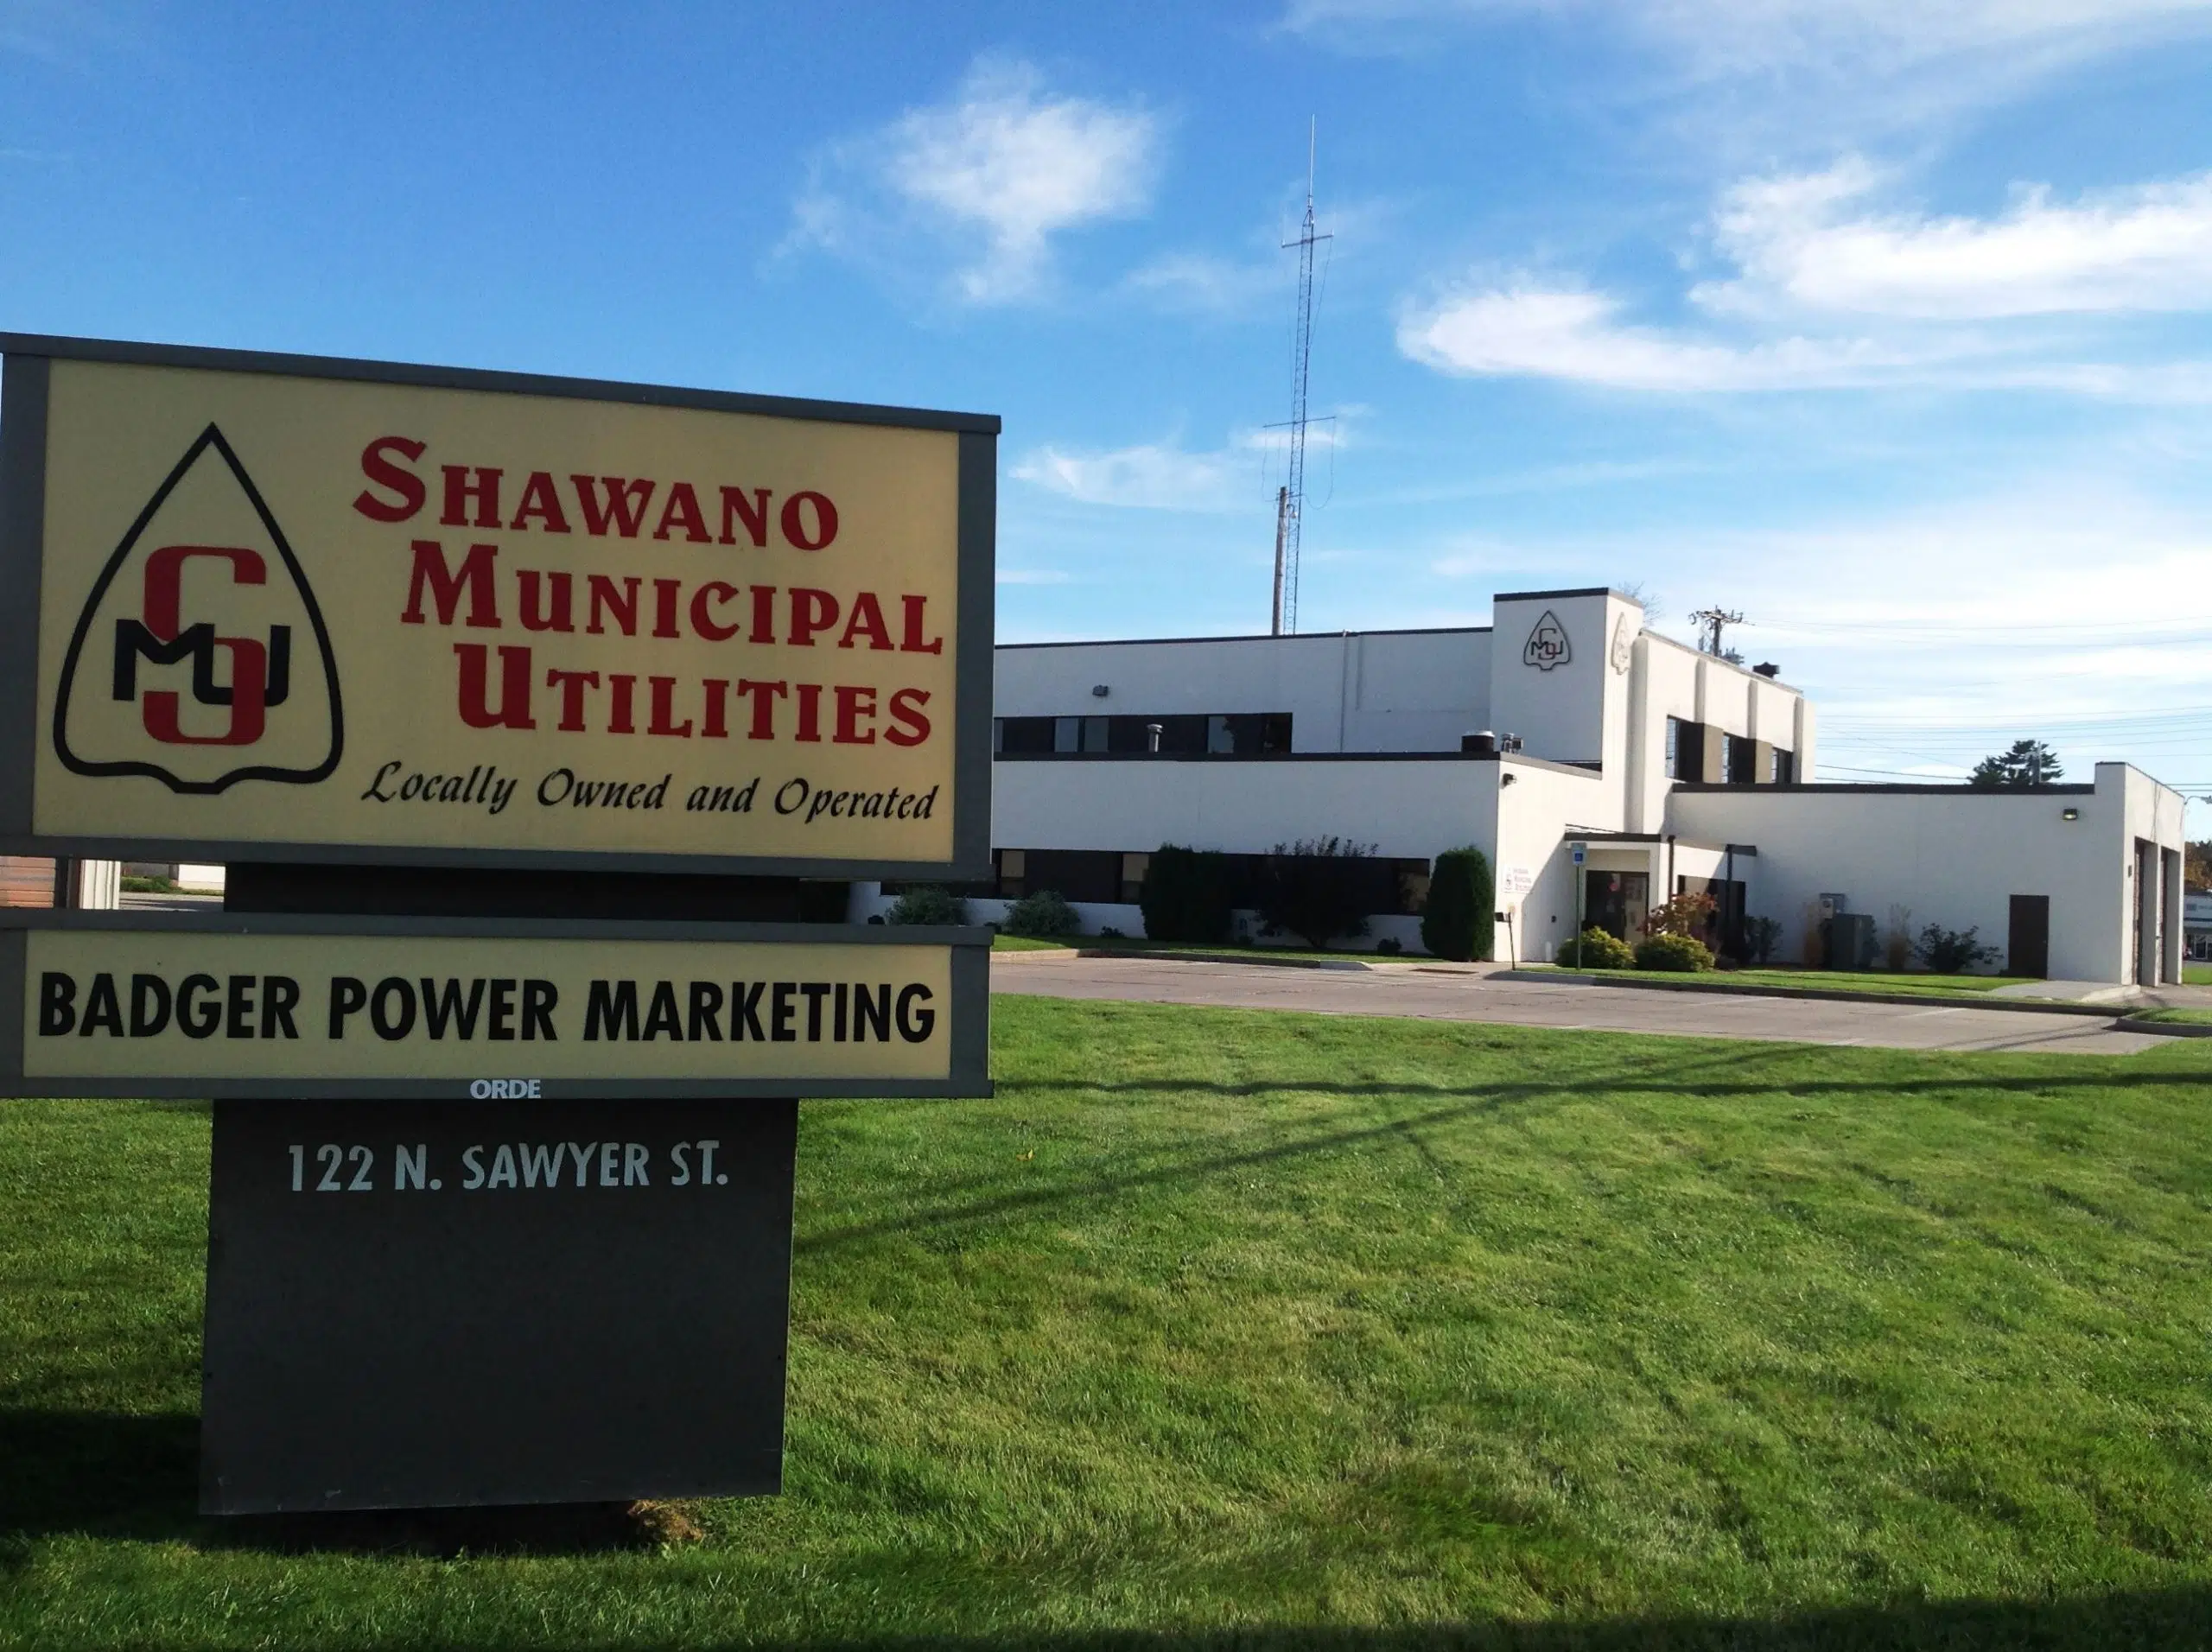 SMU Identifies "Power Theft" in Shawano